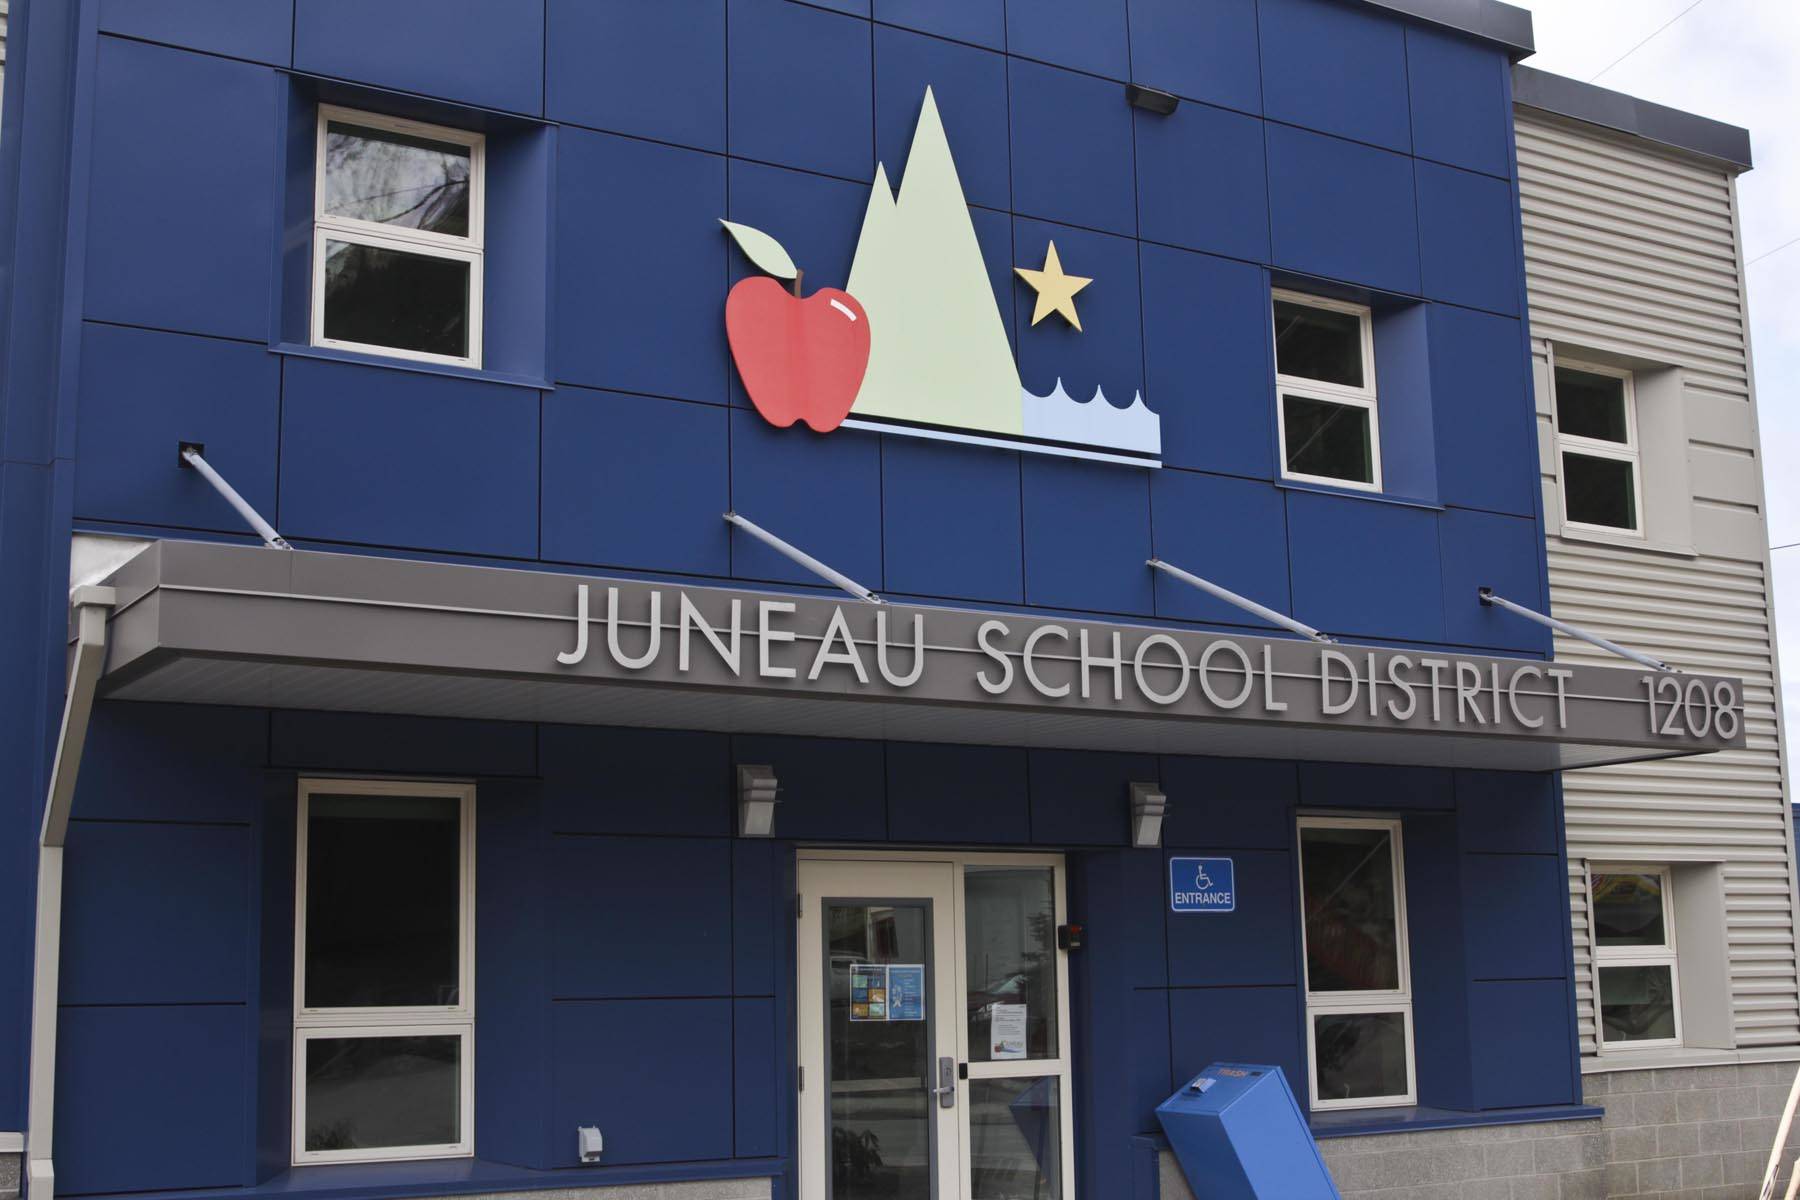 The Juneau School District building, March 20, 2020. (Michael S. Lockett / Juneau Empire File)